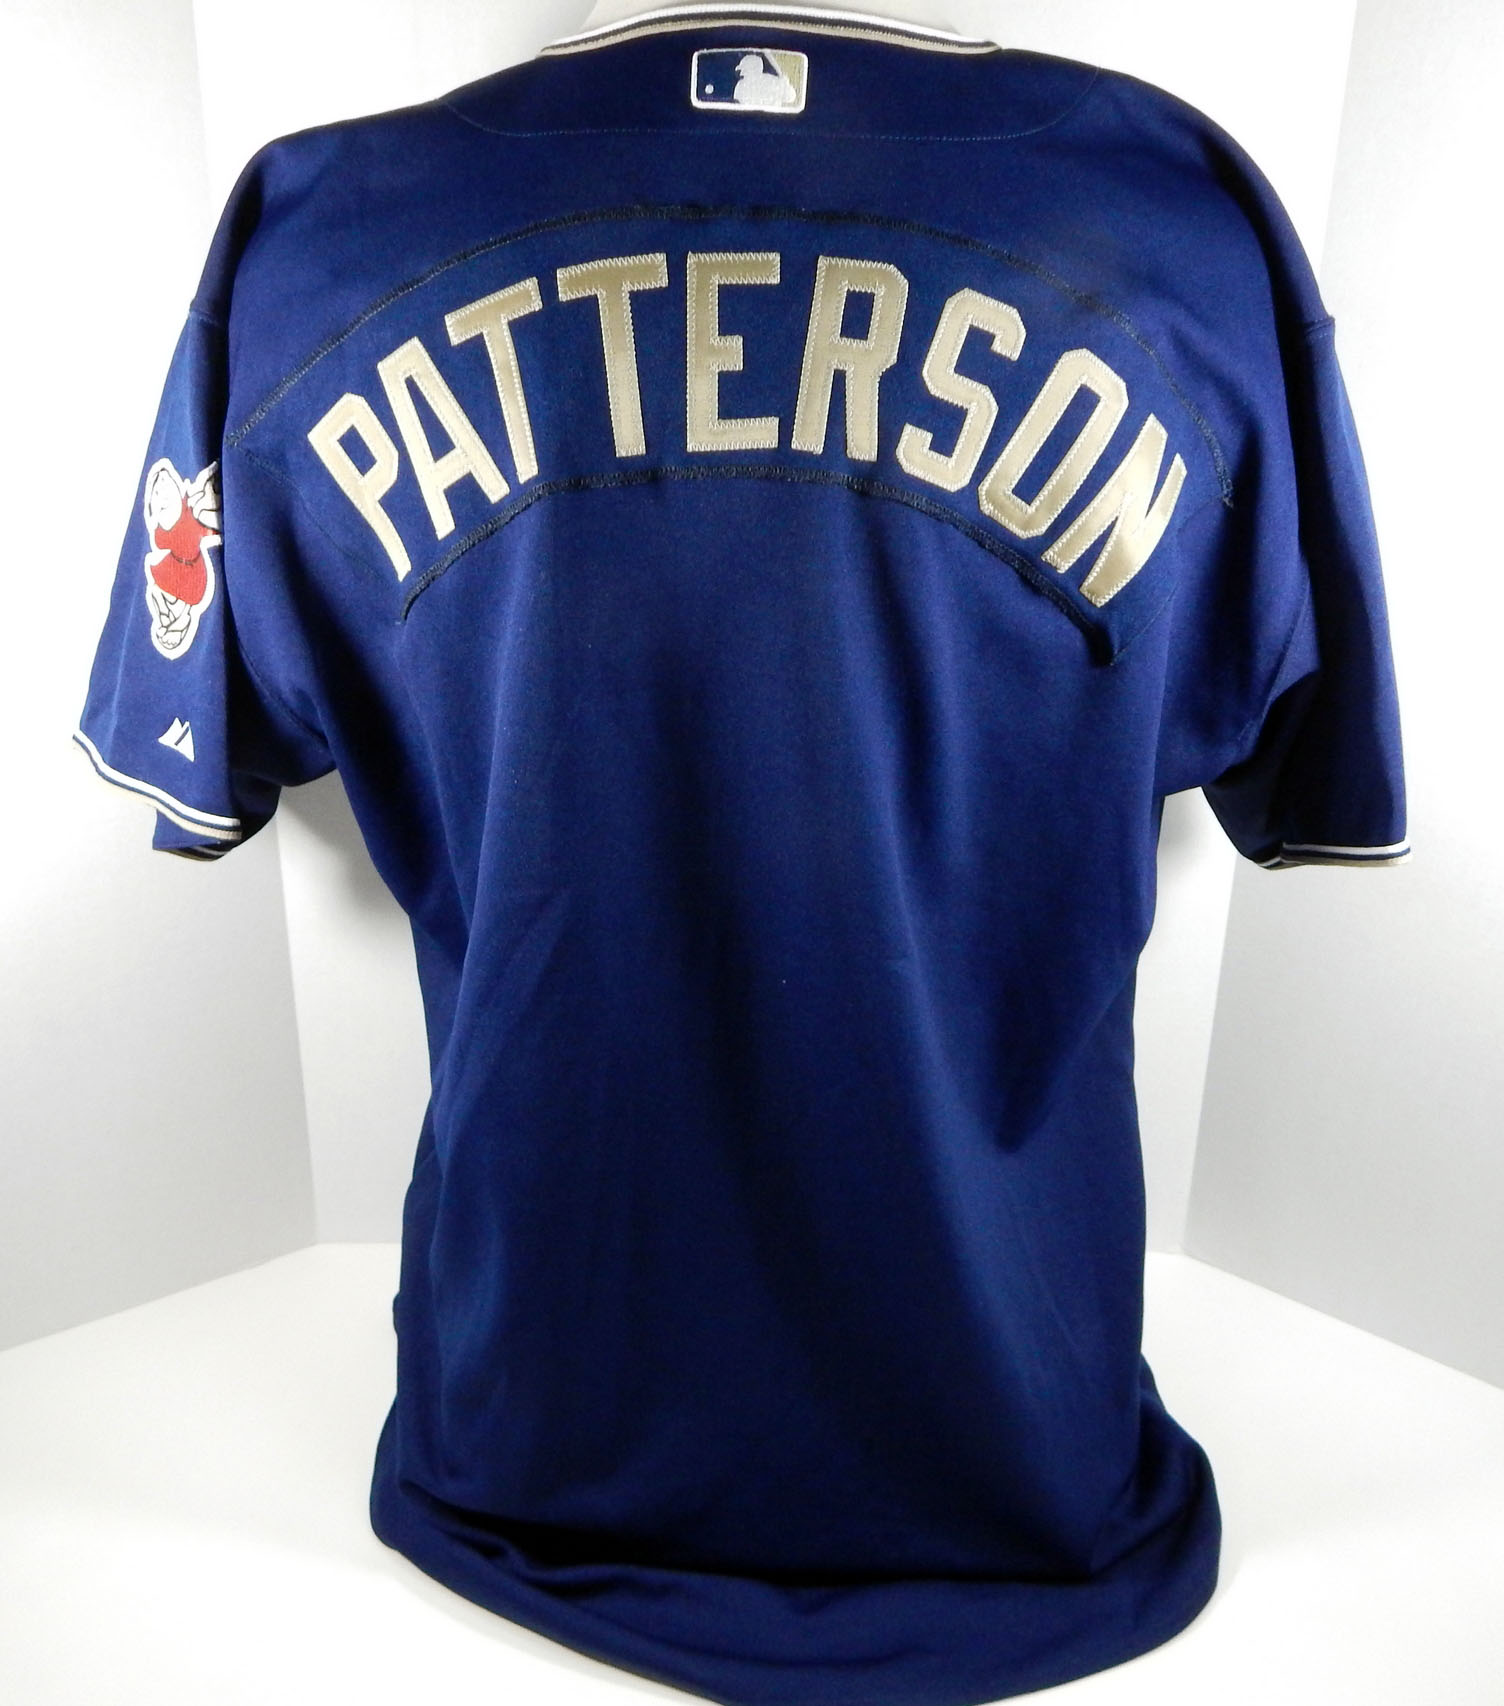 patterson jersey